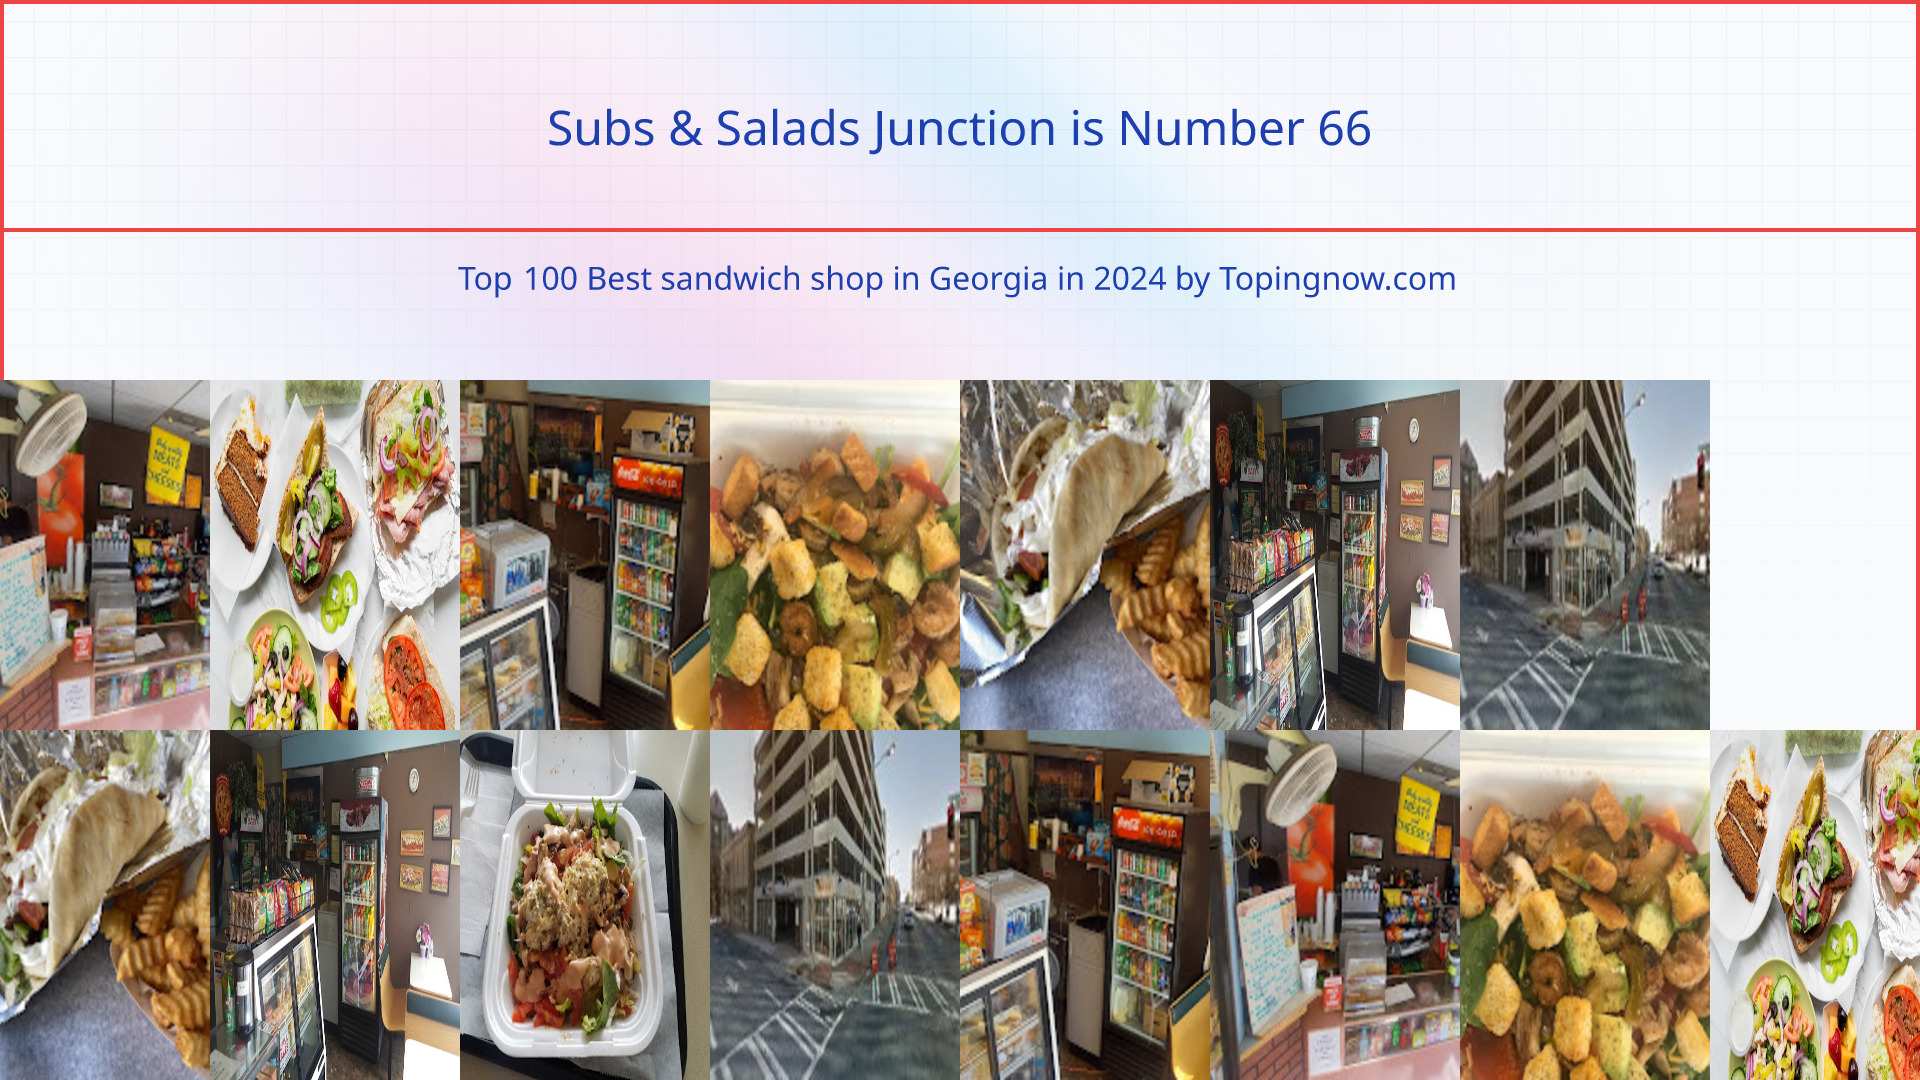 Subs & Salads Junction: Top 100 Best sandwich shop in Georgia in 2024